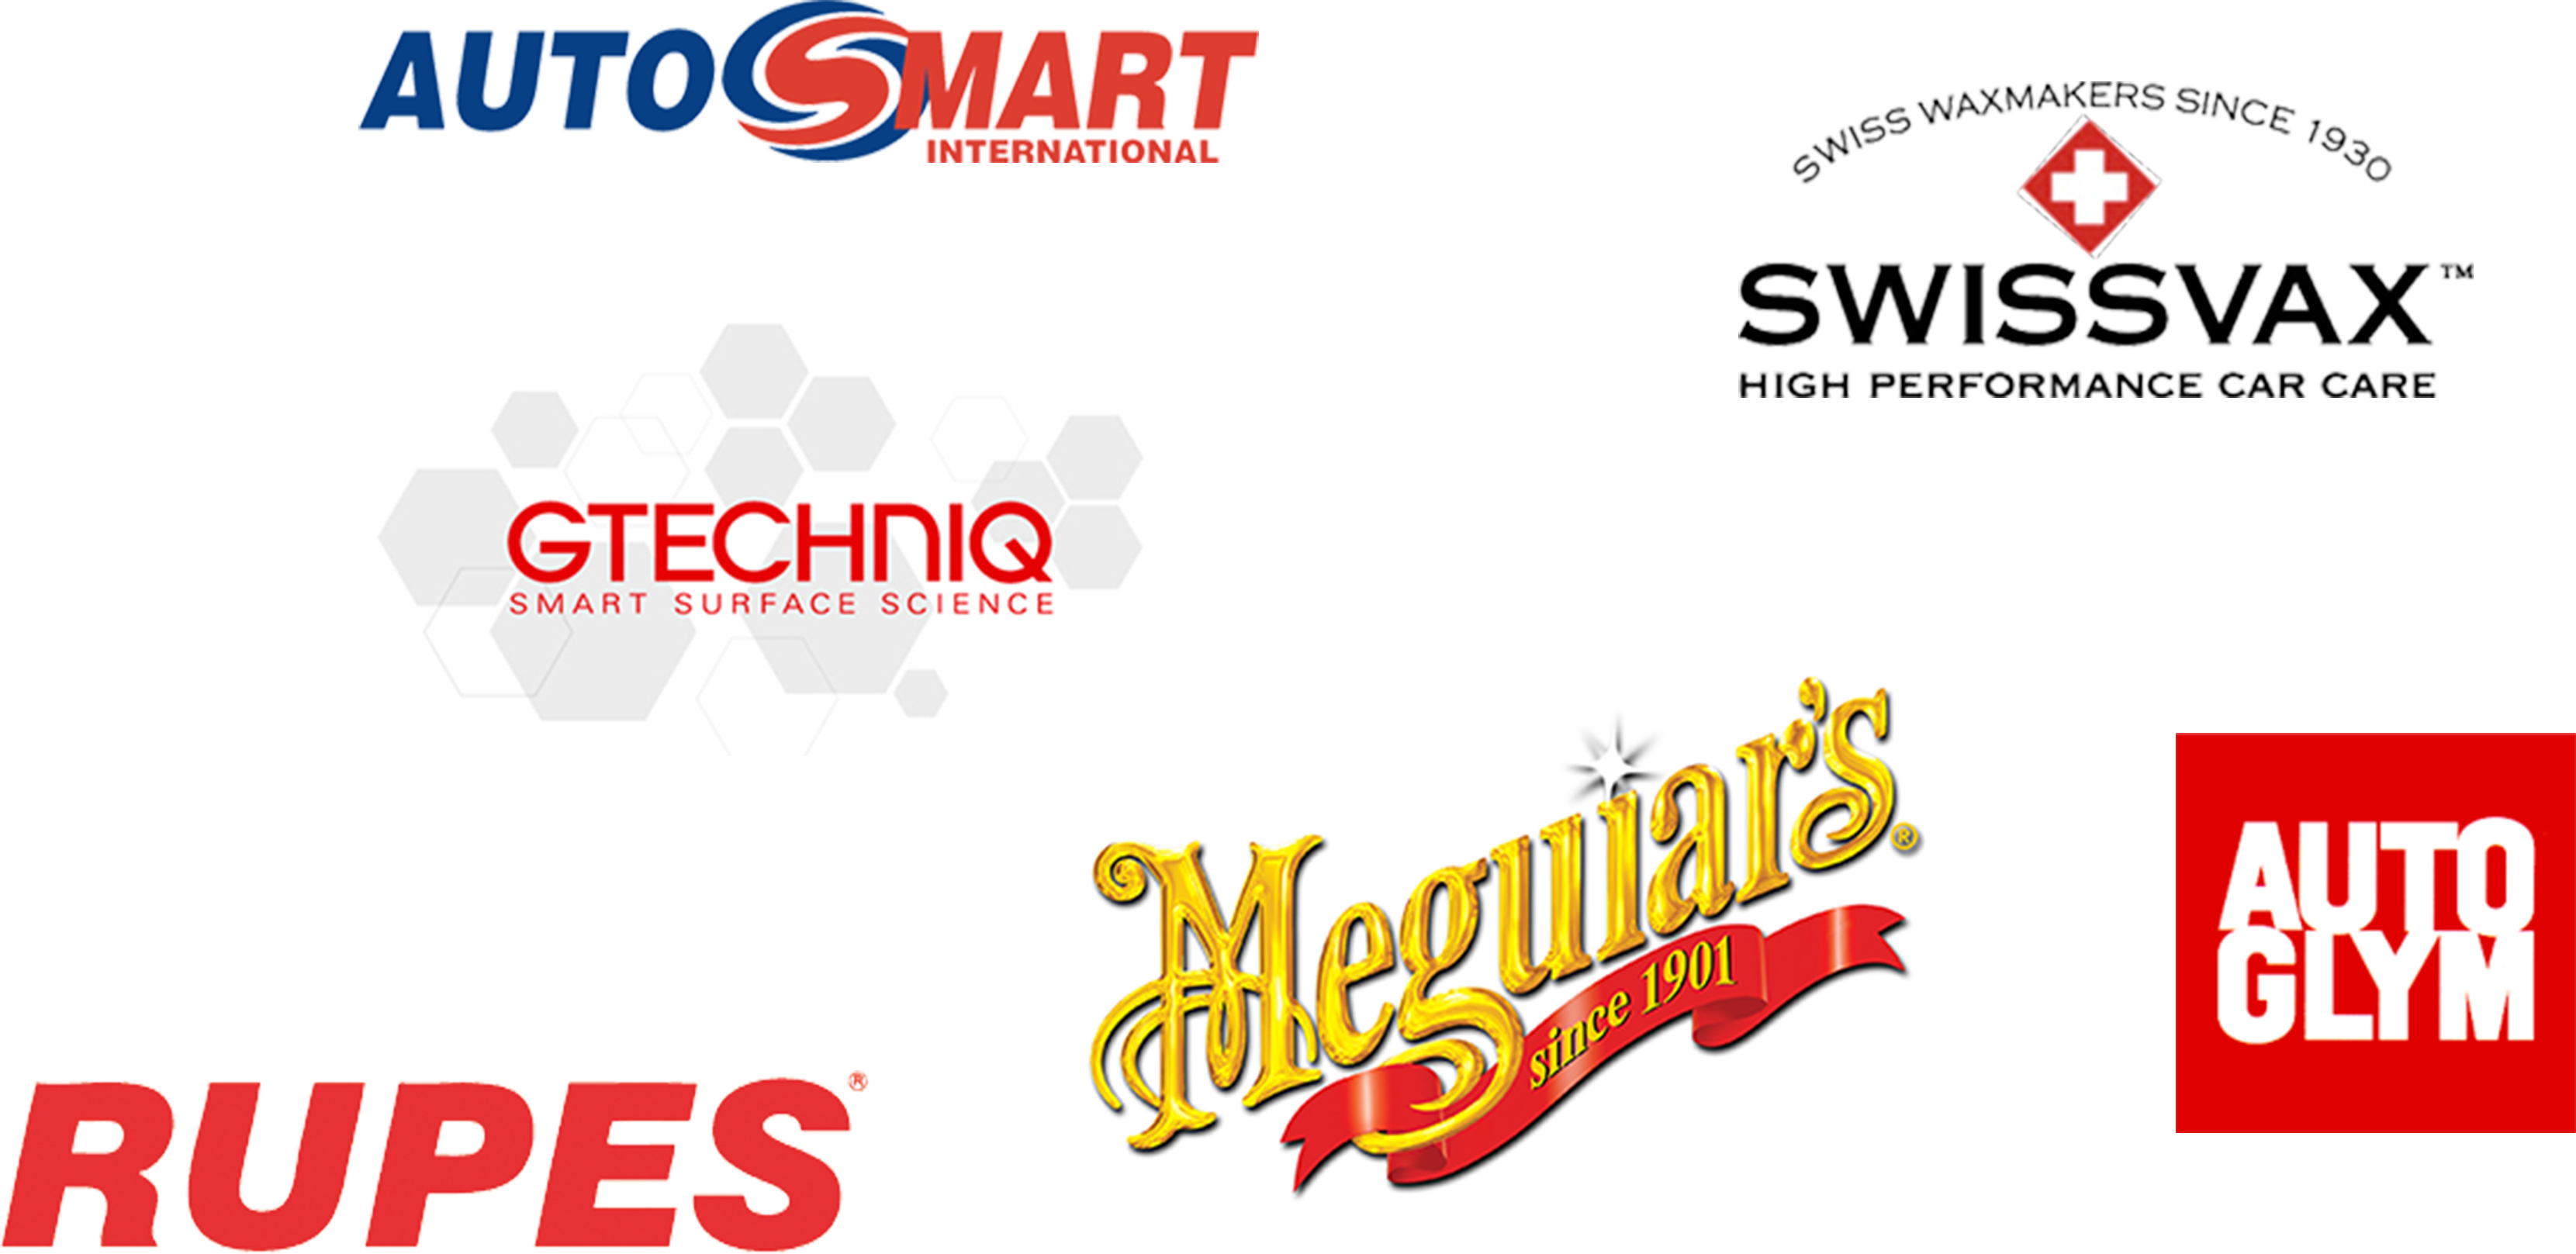 Autosmart logo, Swissvax logo, GTECHNIQ logo, Meguiars logo, Auto Glym logo, Rupes logo